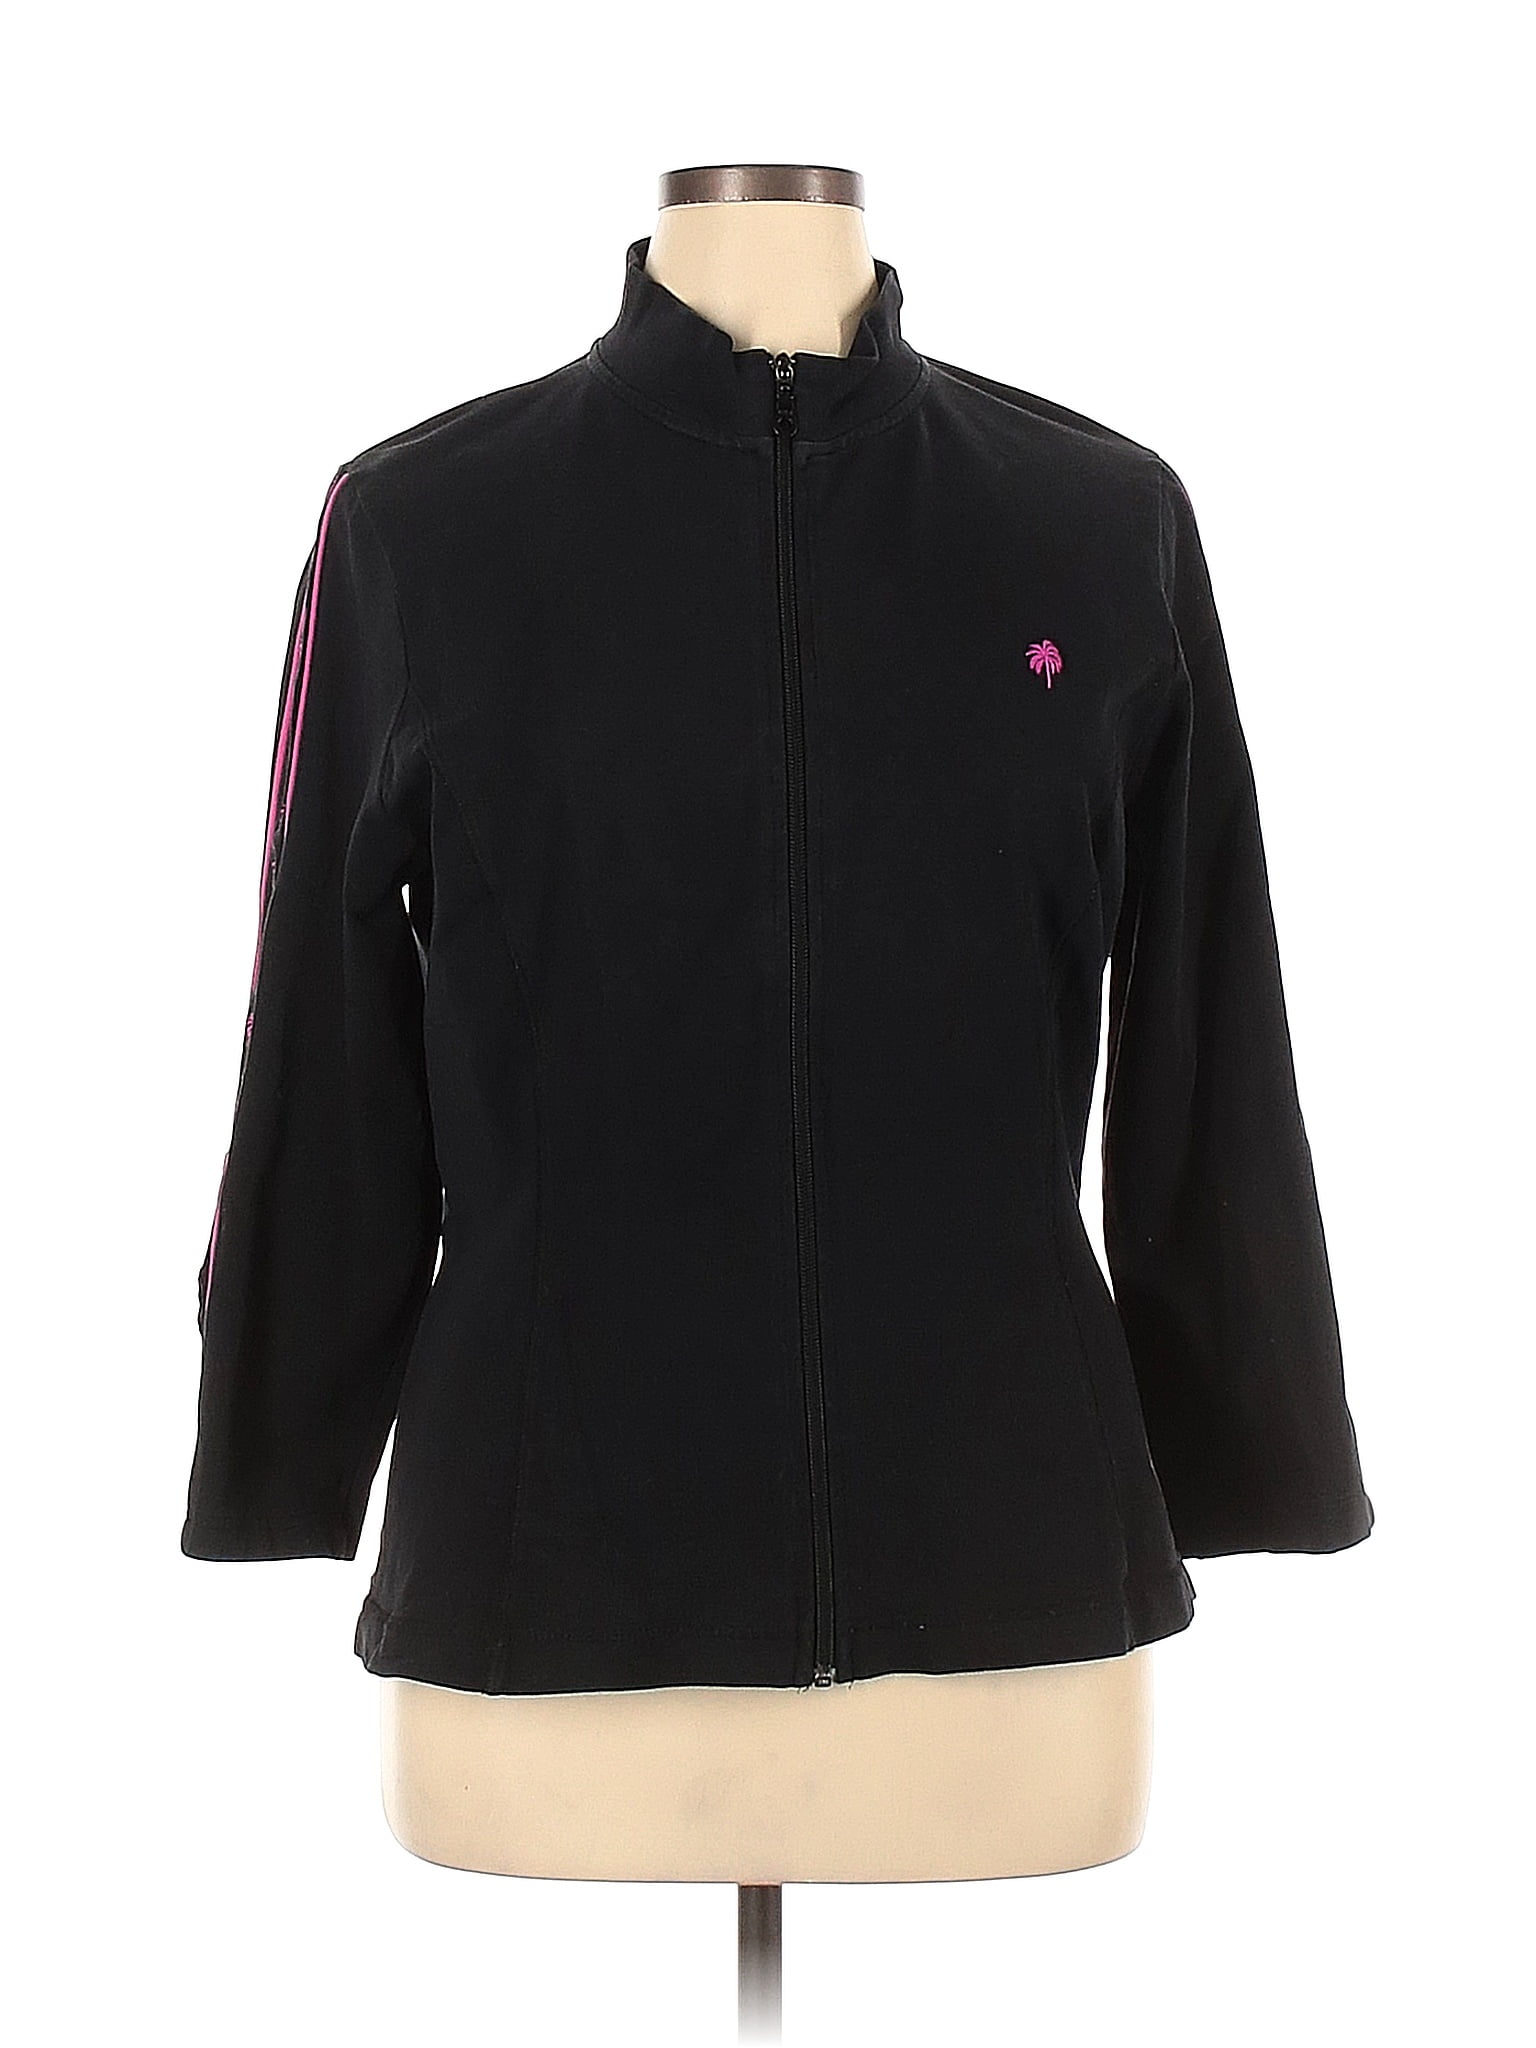 Lilly Pulitzer Black Track Jacket Size XL - 68% off | thredUP